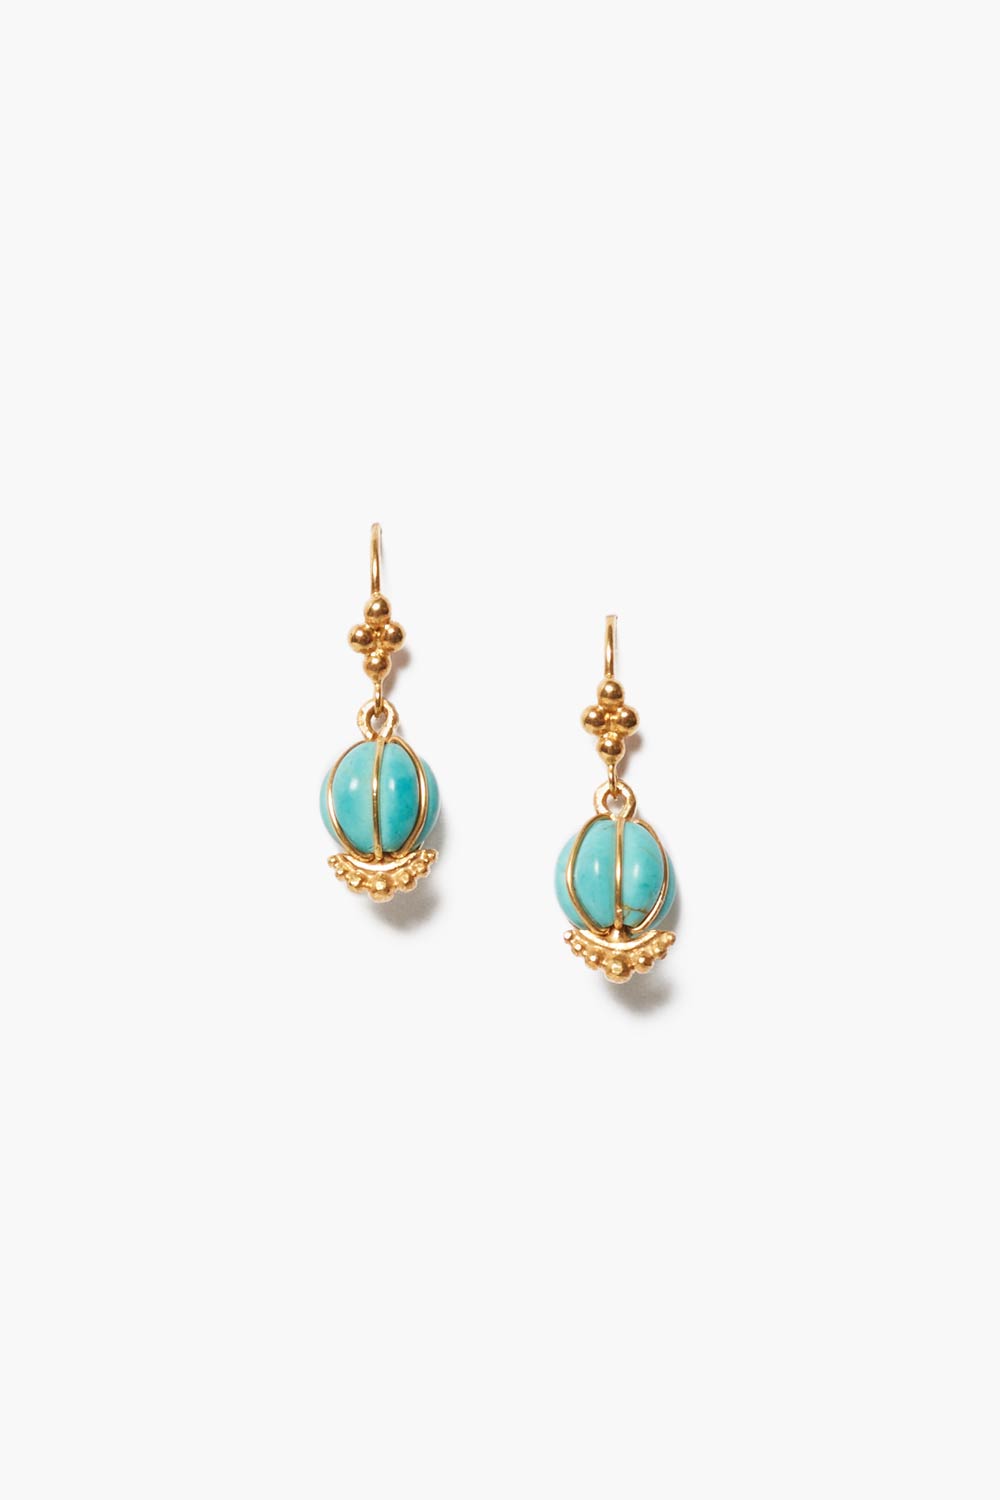 Chan Luu | Balloon Earrings | Turquoise